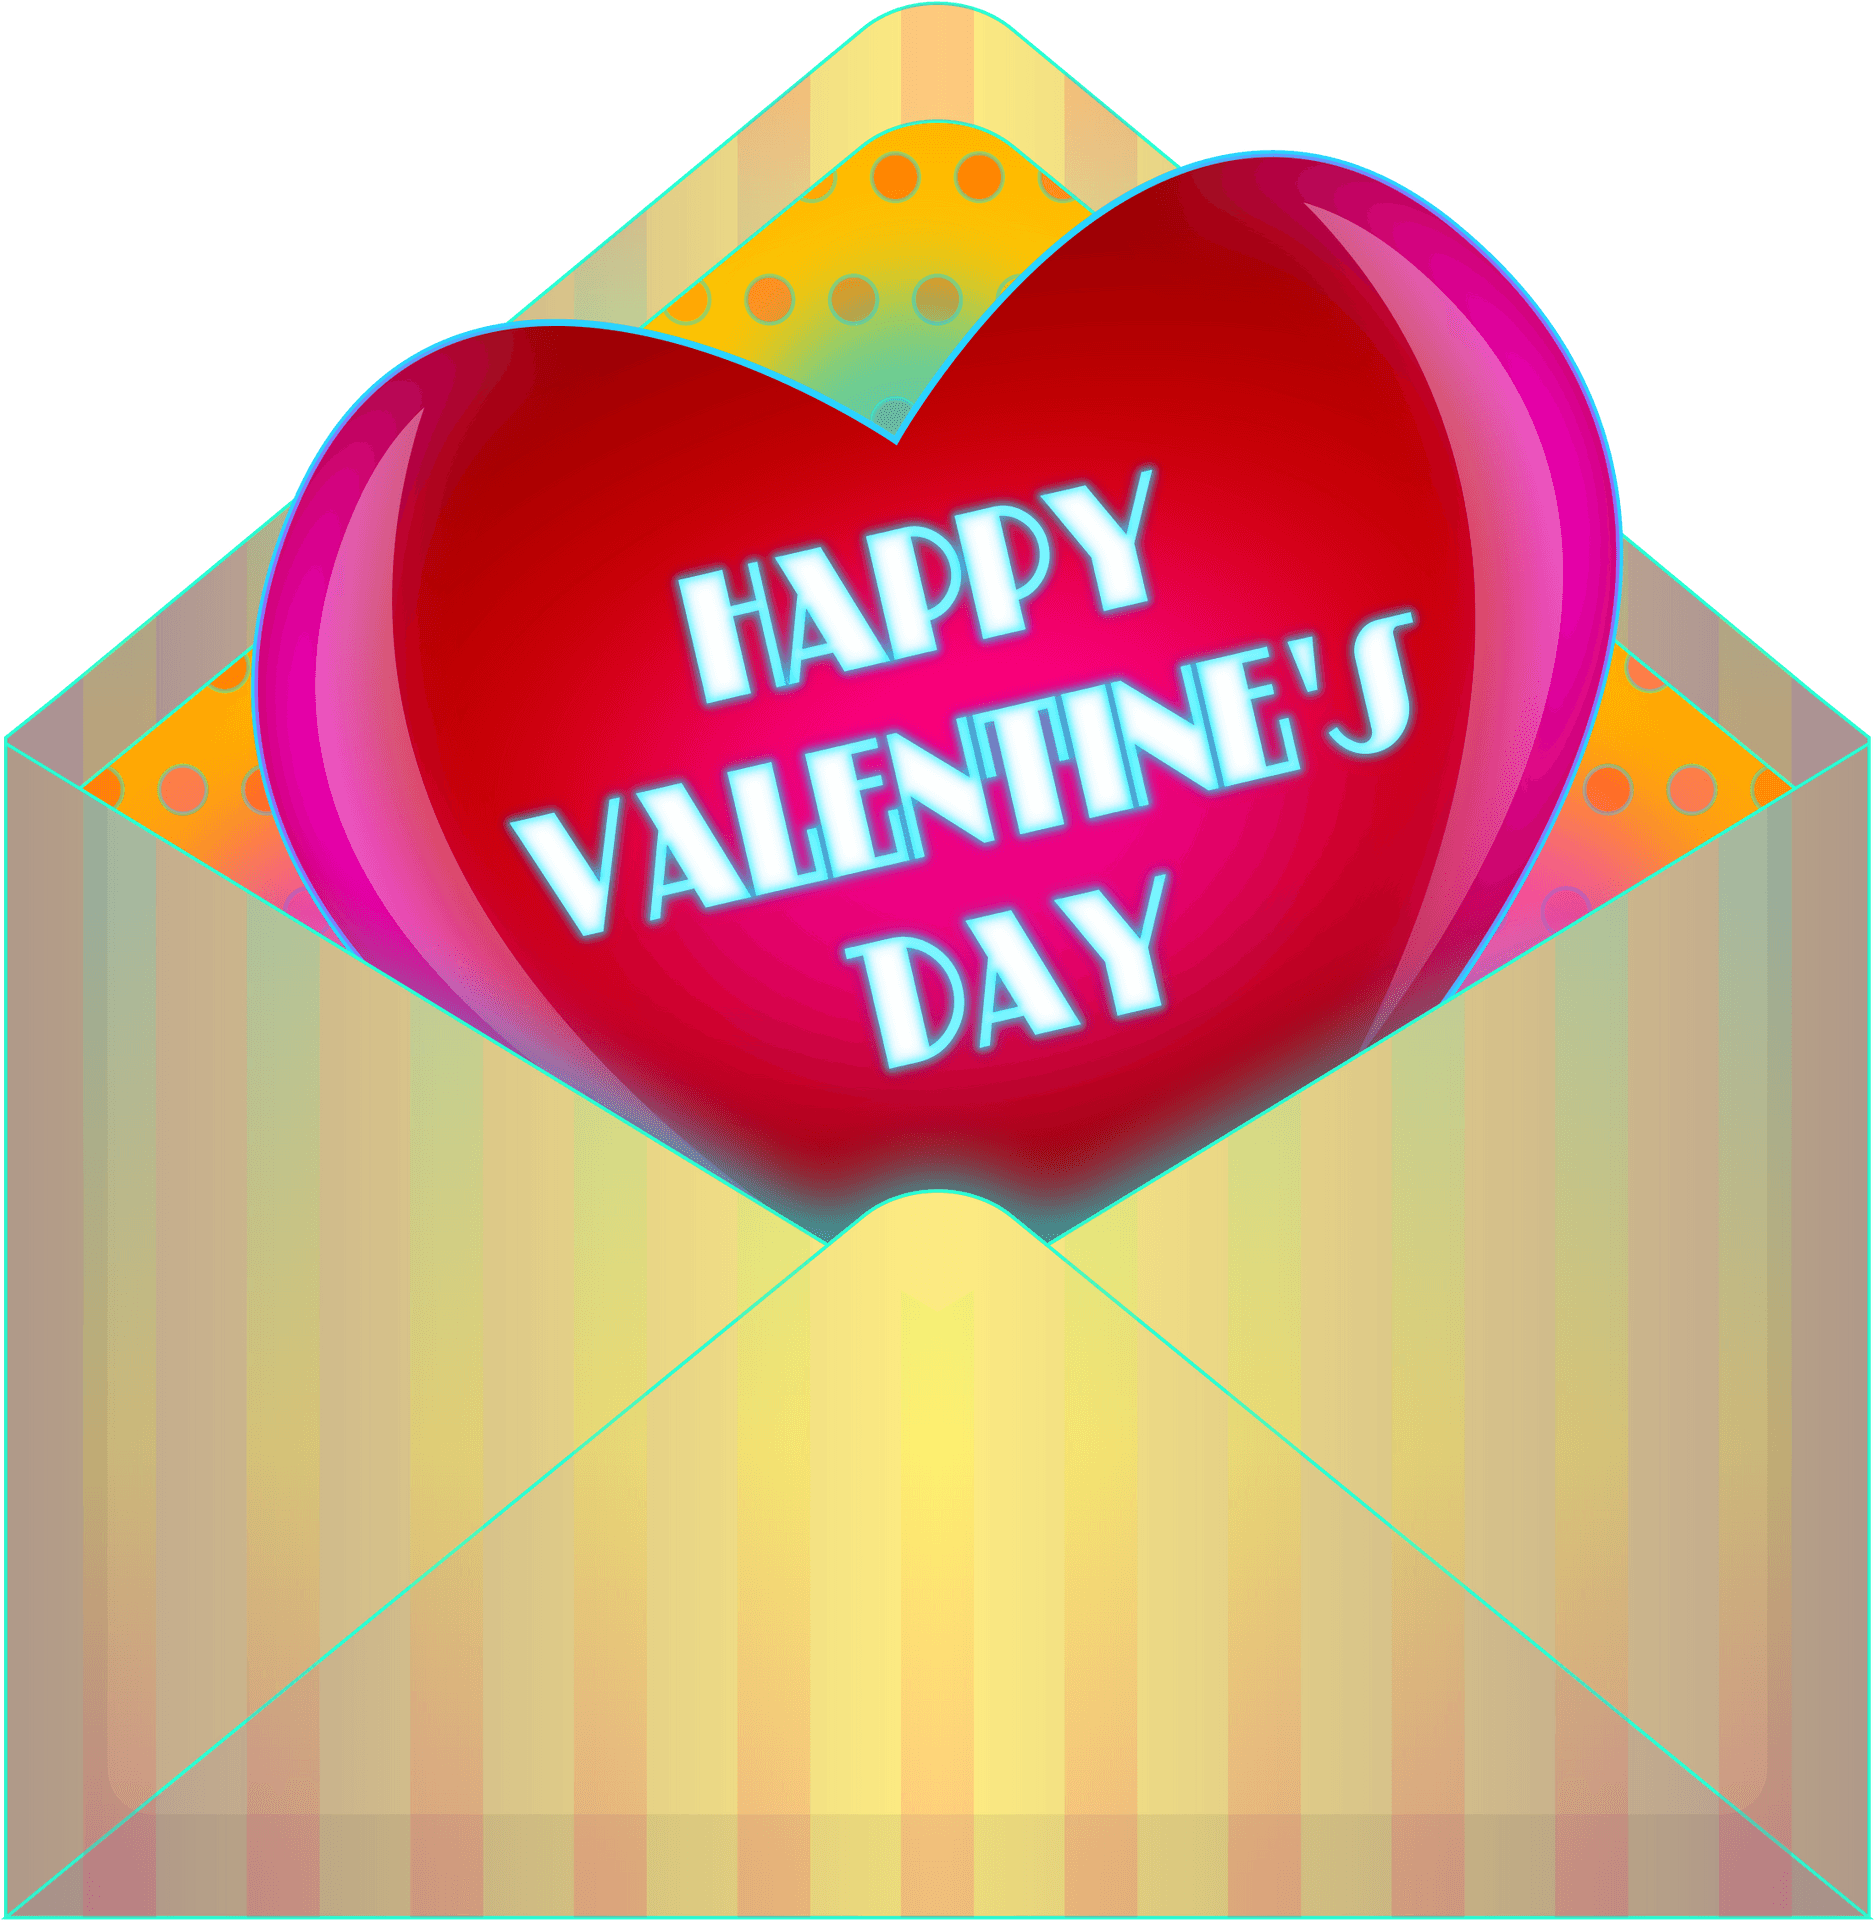 Valentines Day Heart Envelope PNG image